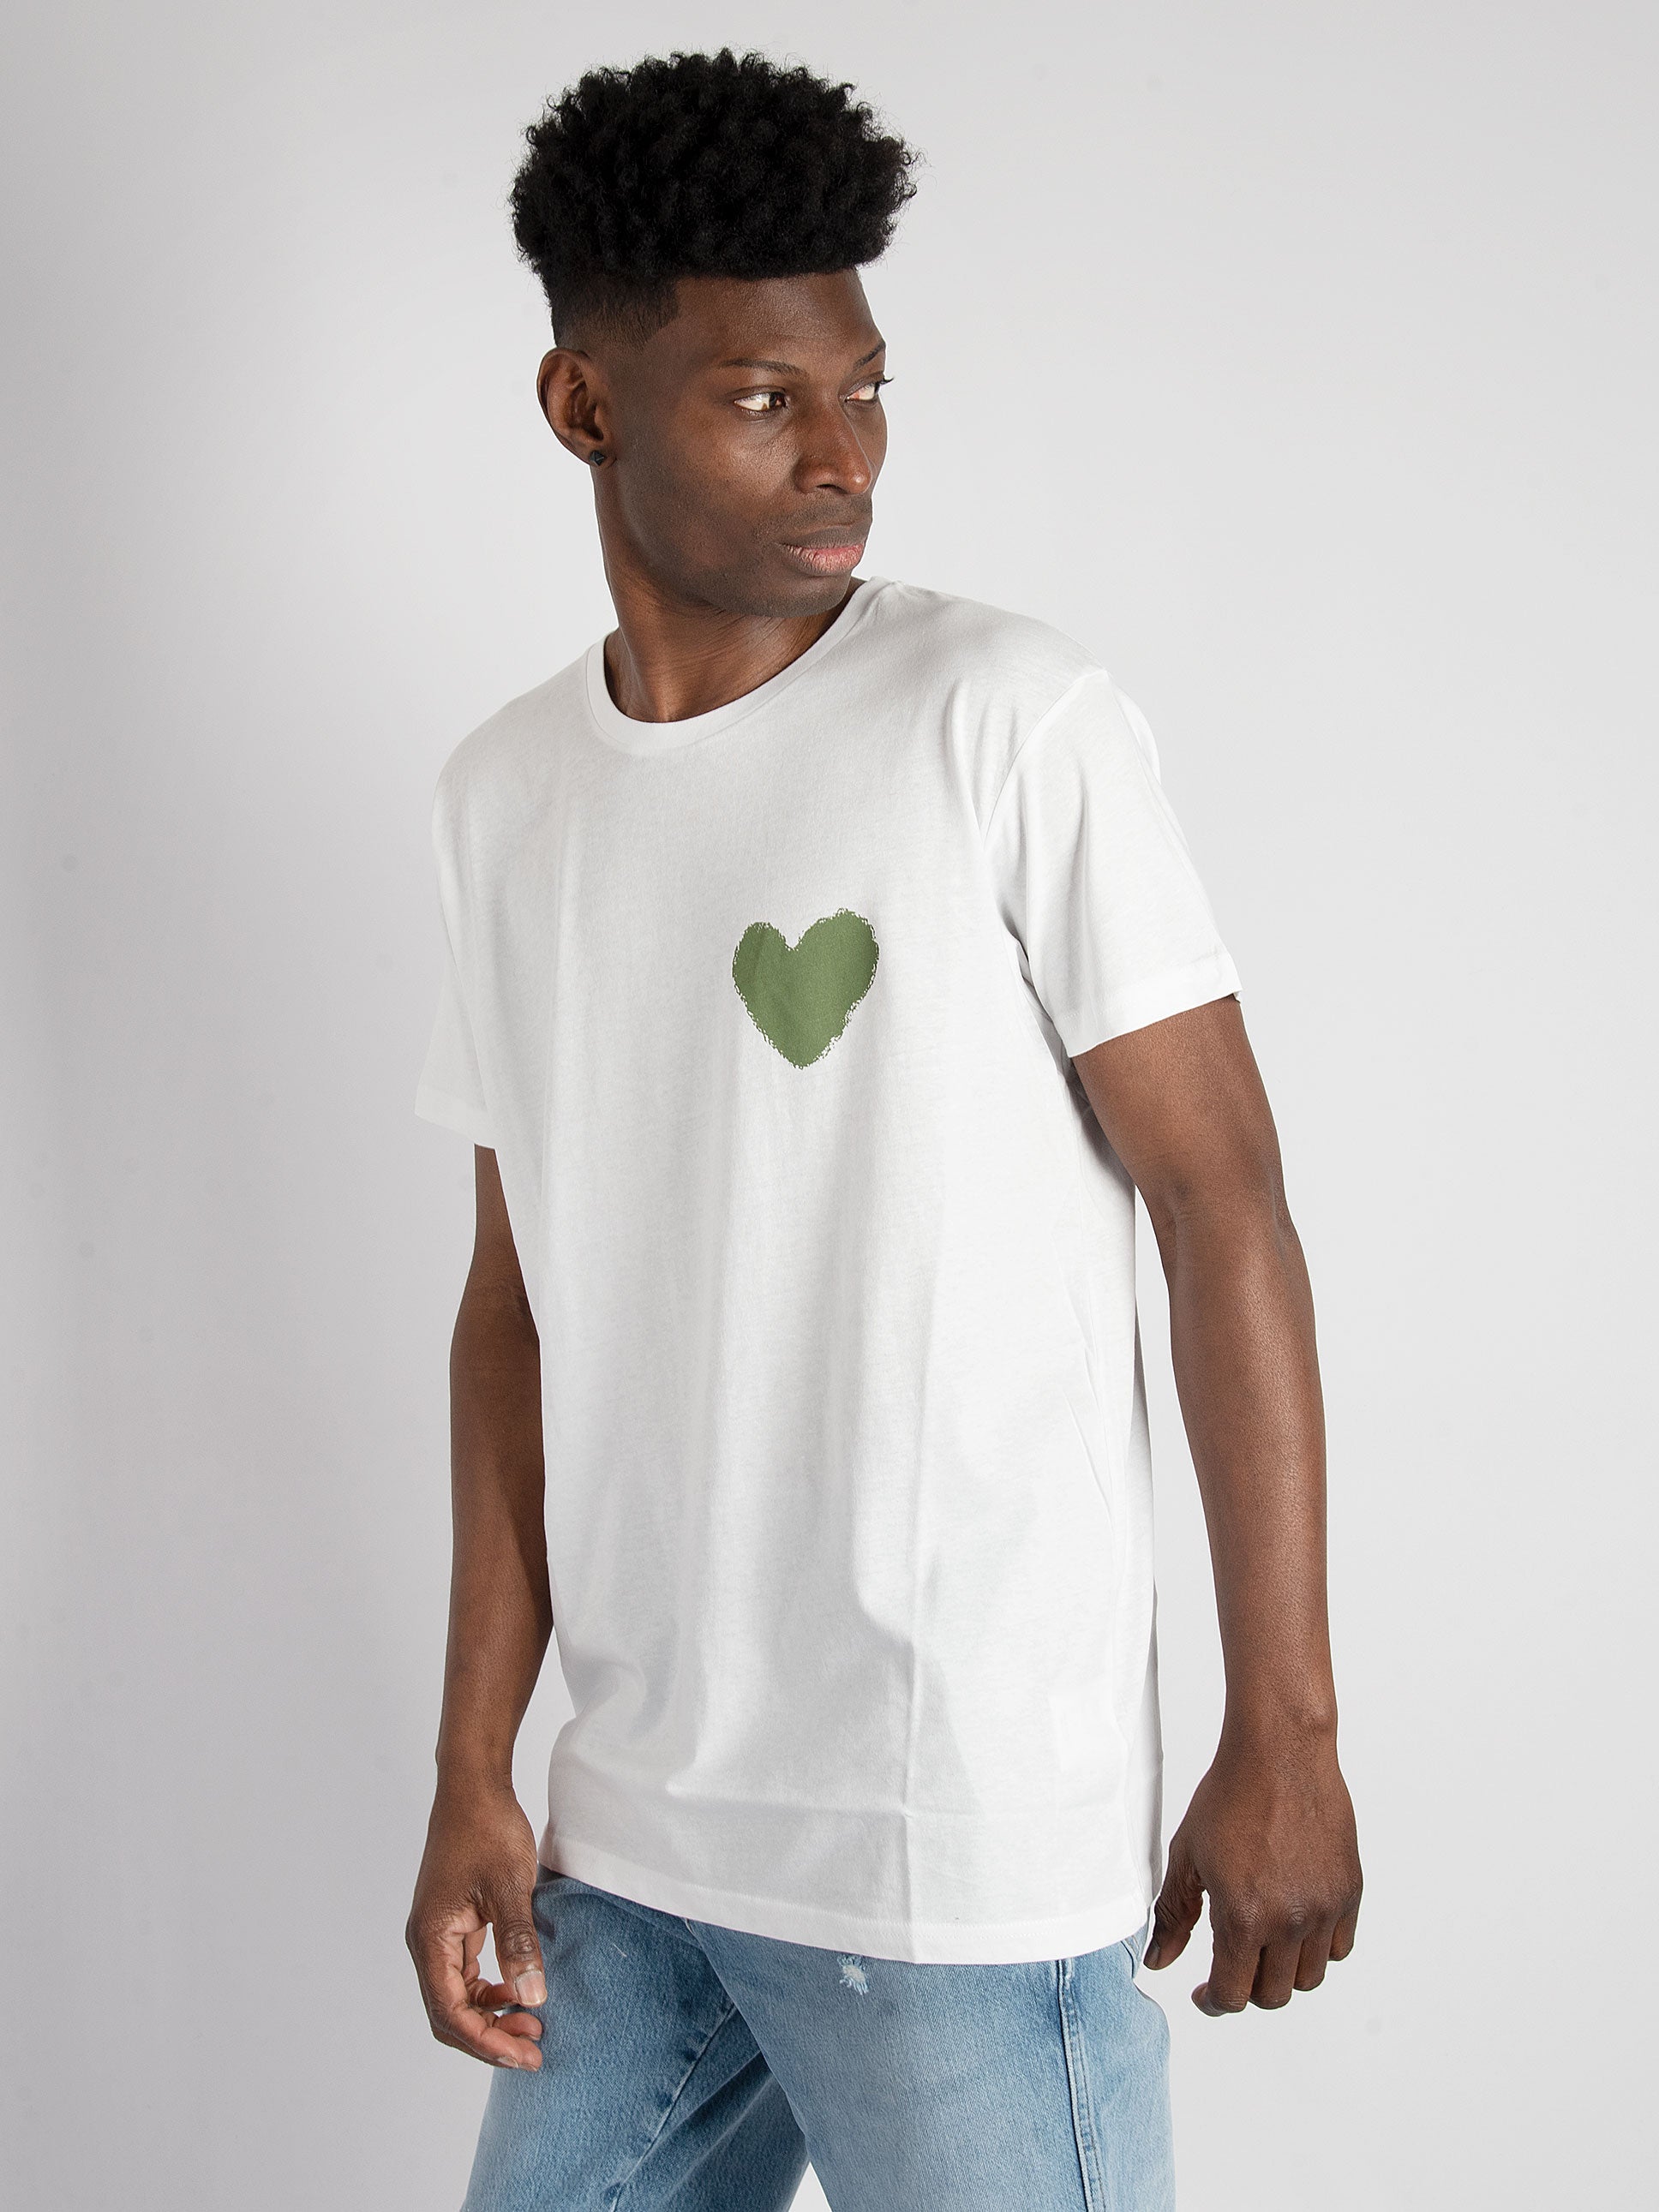 T-Shirt Inspire Heart - Bianco/Verde